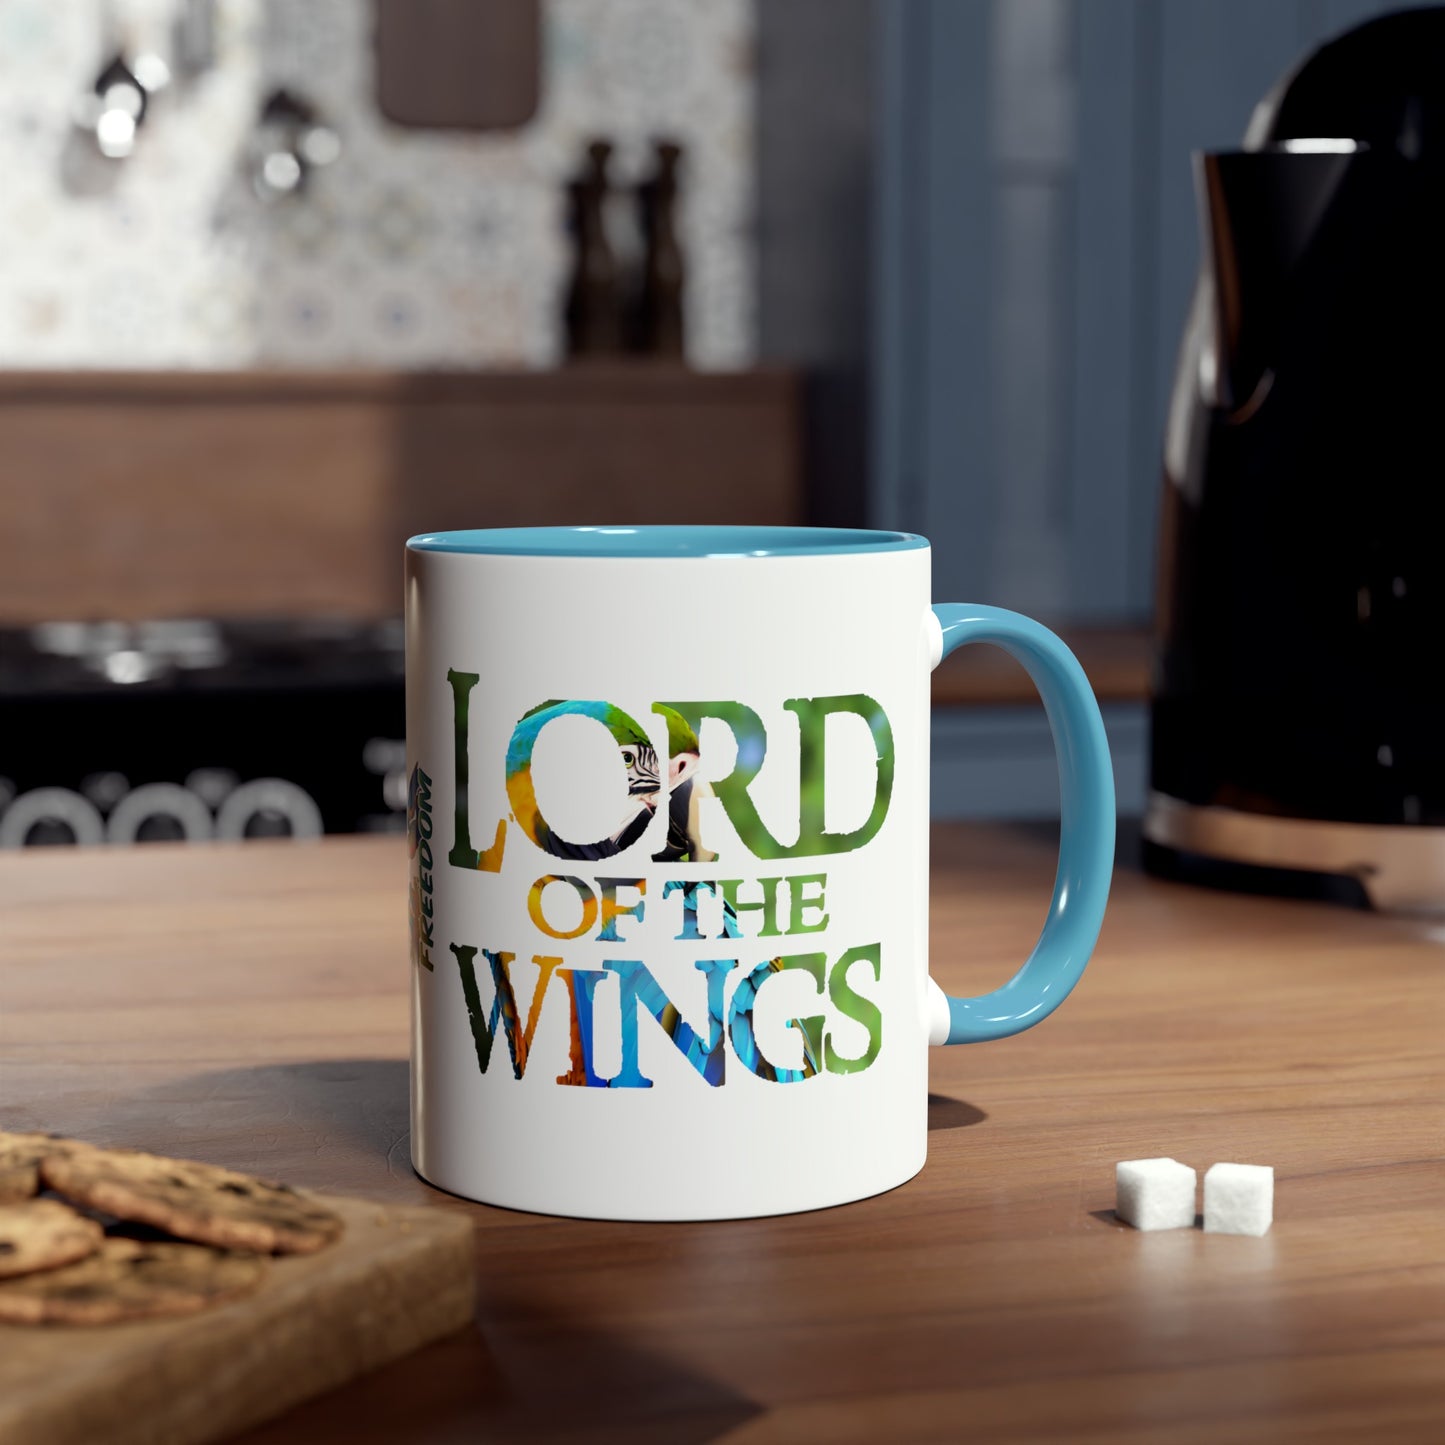 Lord of the Wings Ltd two tone mug